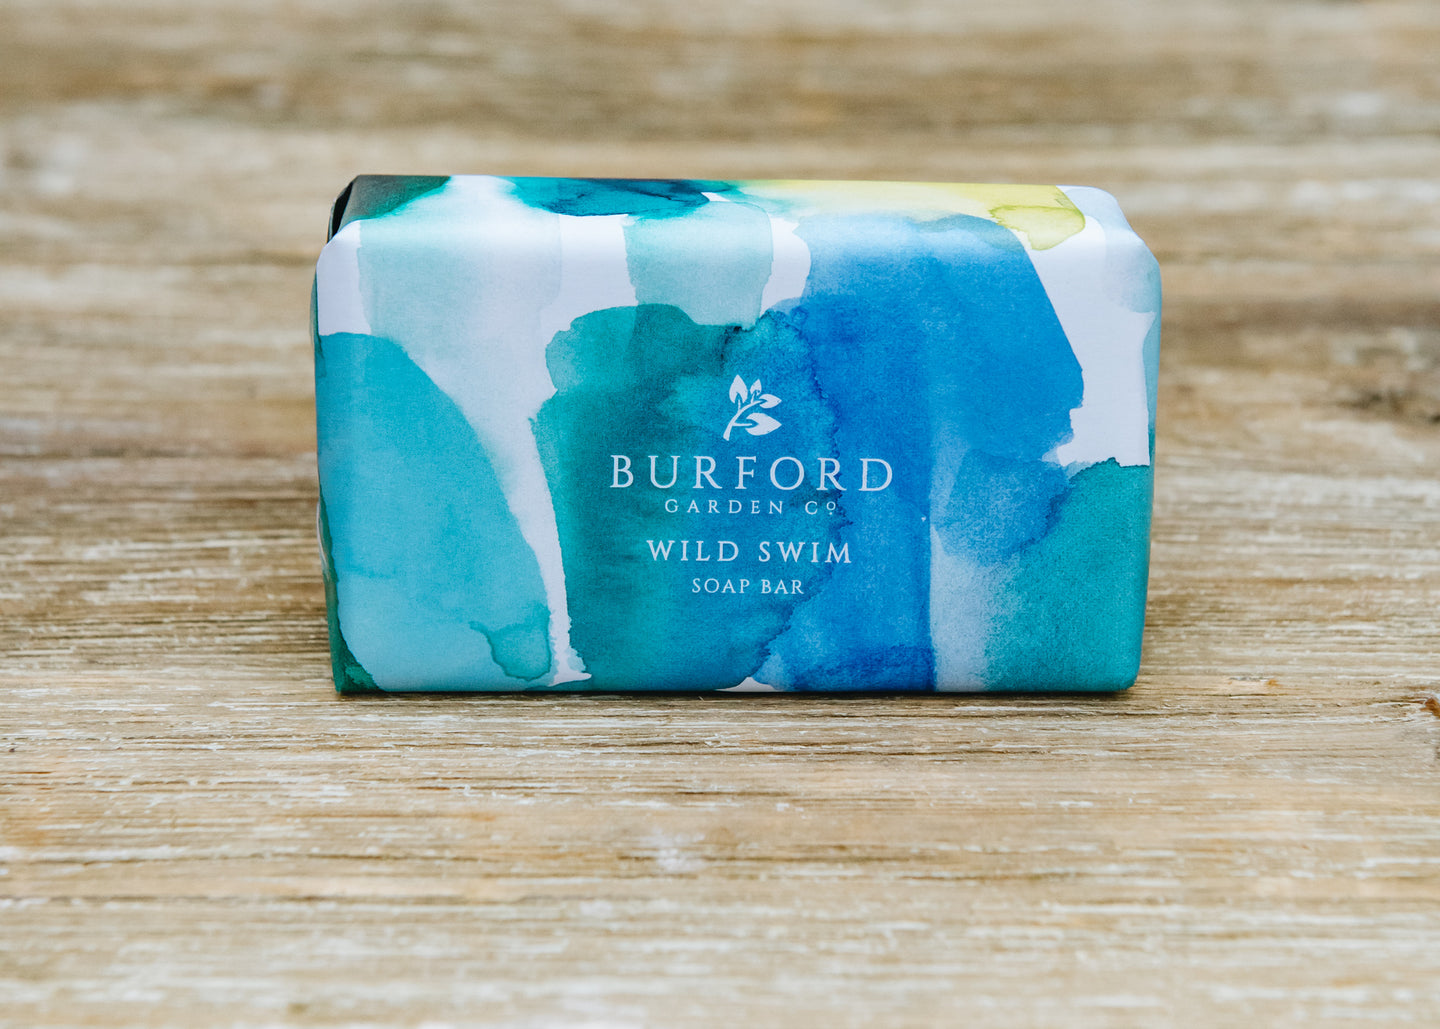 Burford Bath Soap in Wild Swim